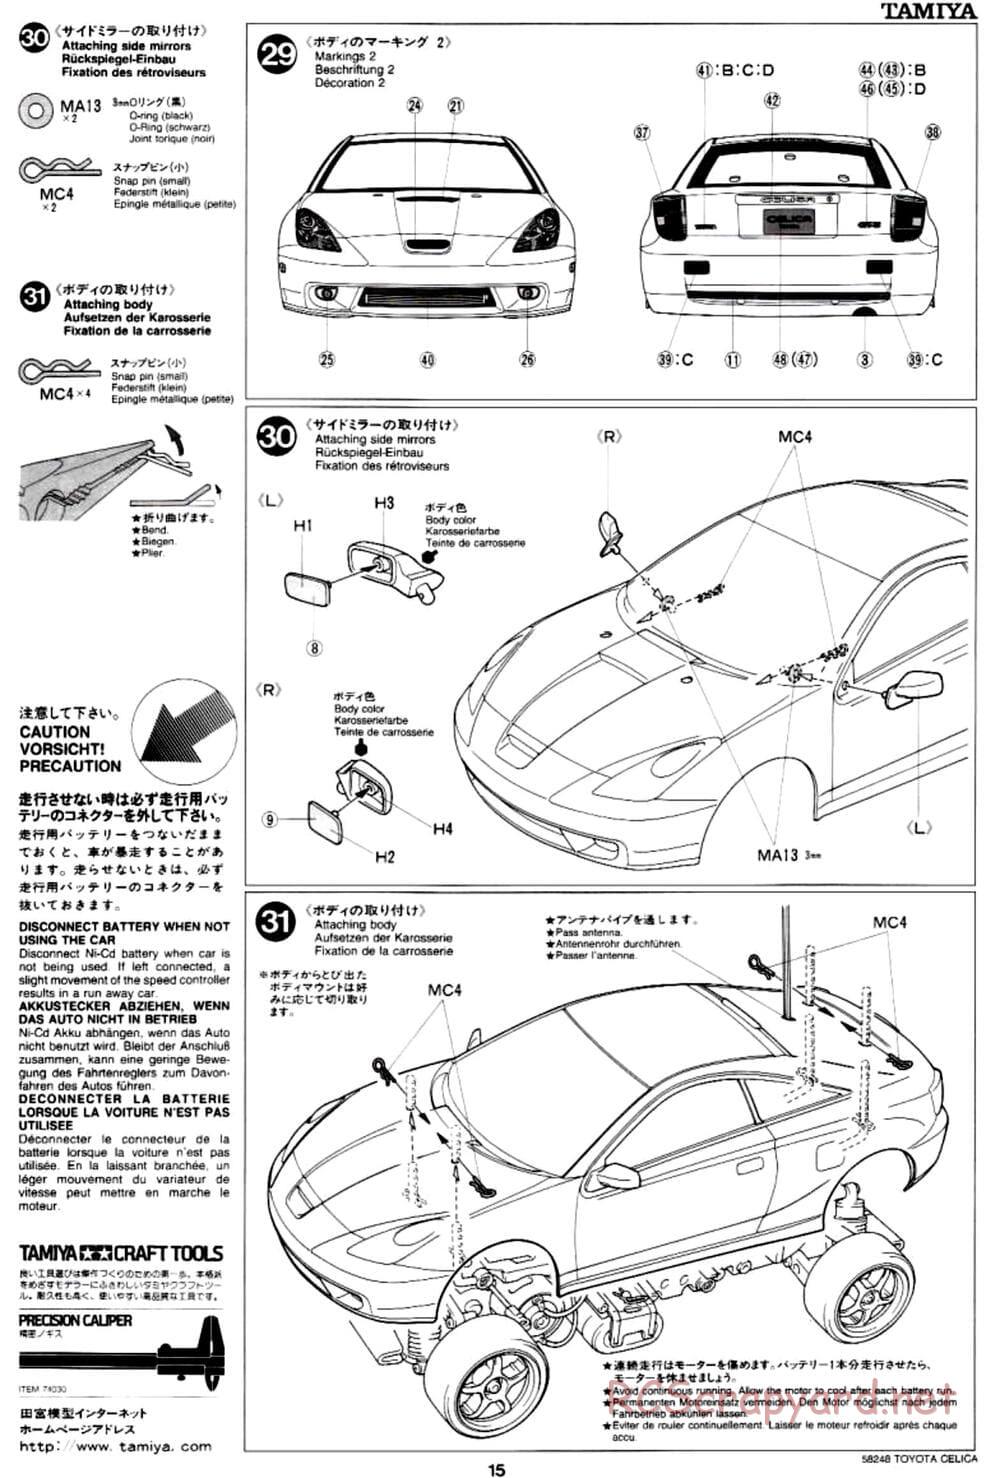 Tamiya - Toyota Celica - FF-02 Chassis - Manual - Page 15